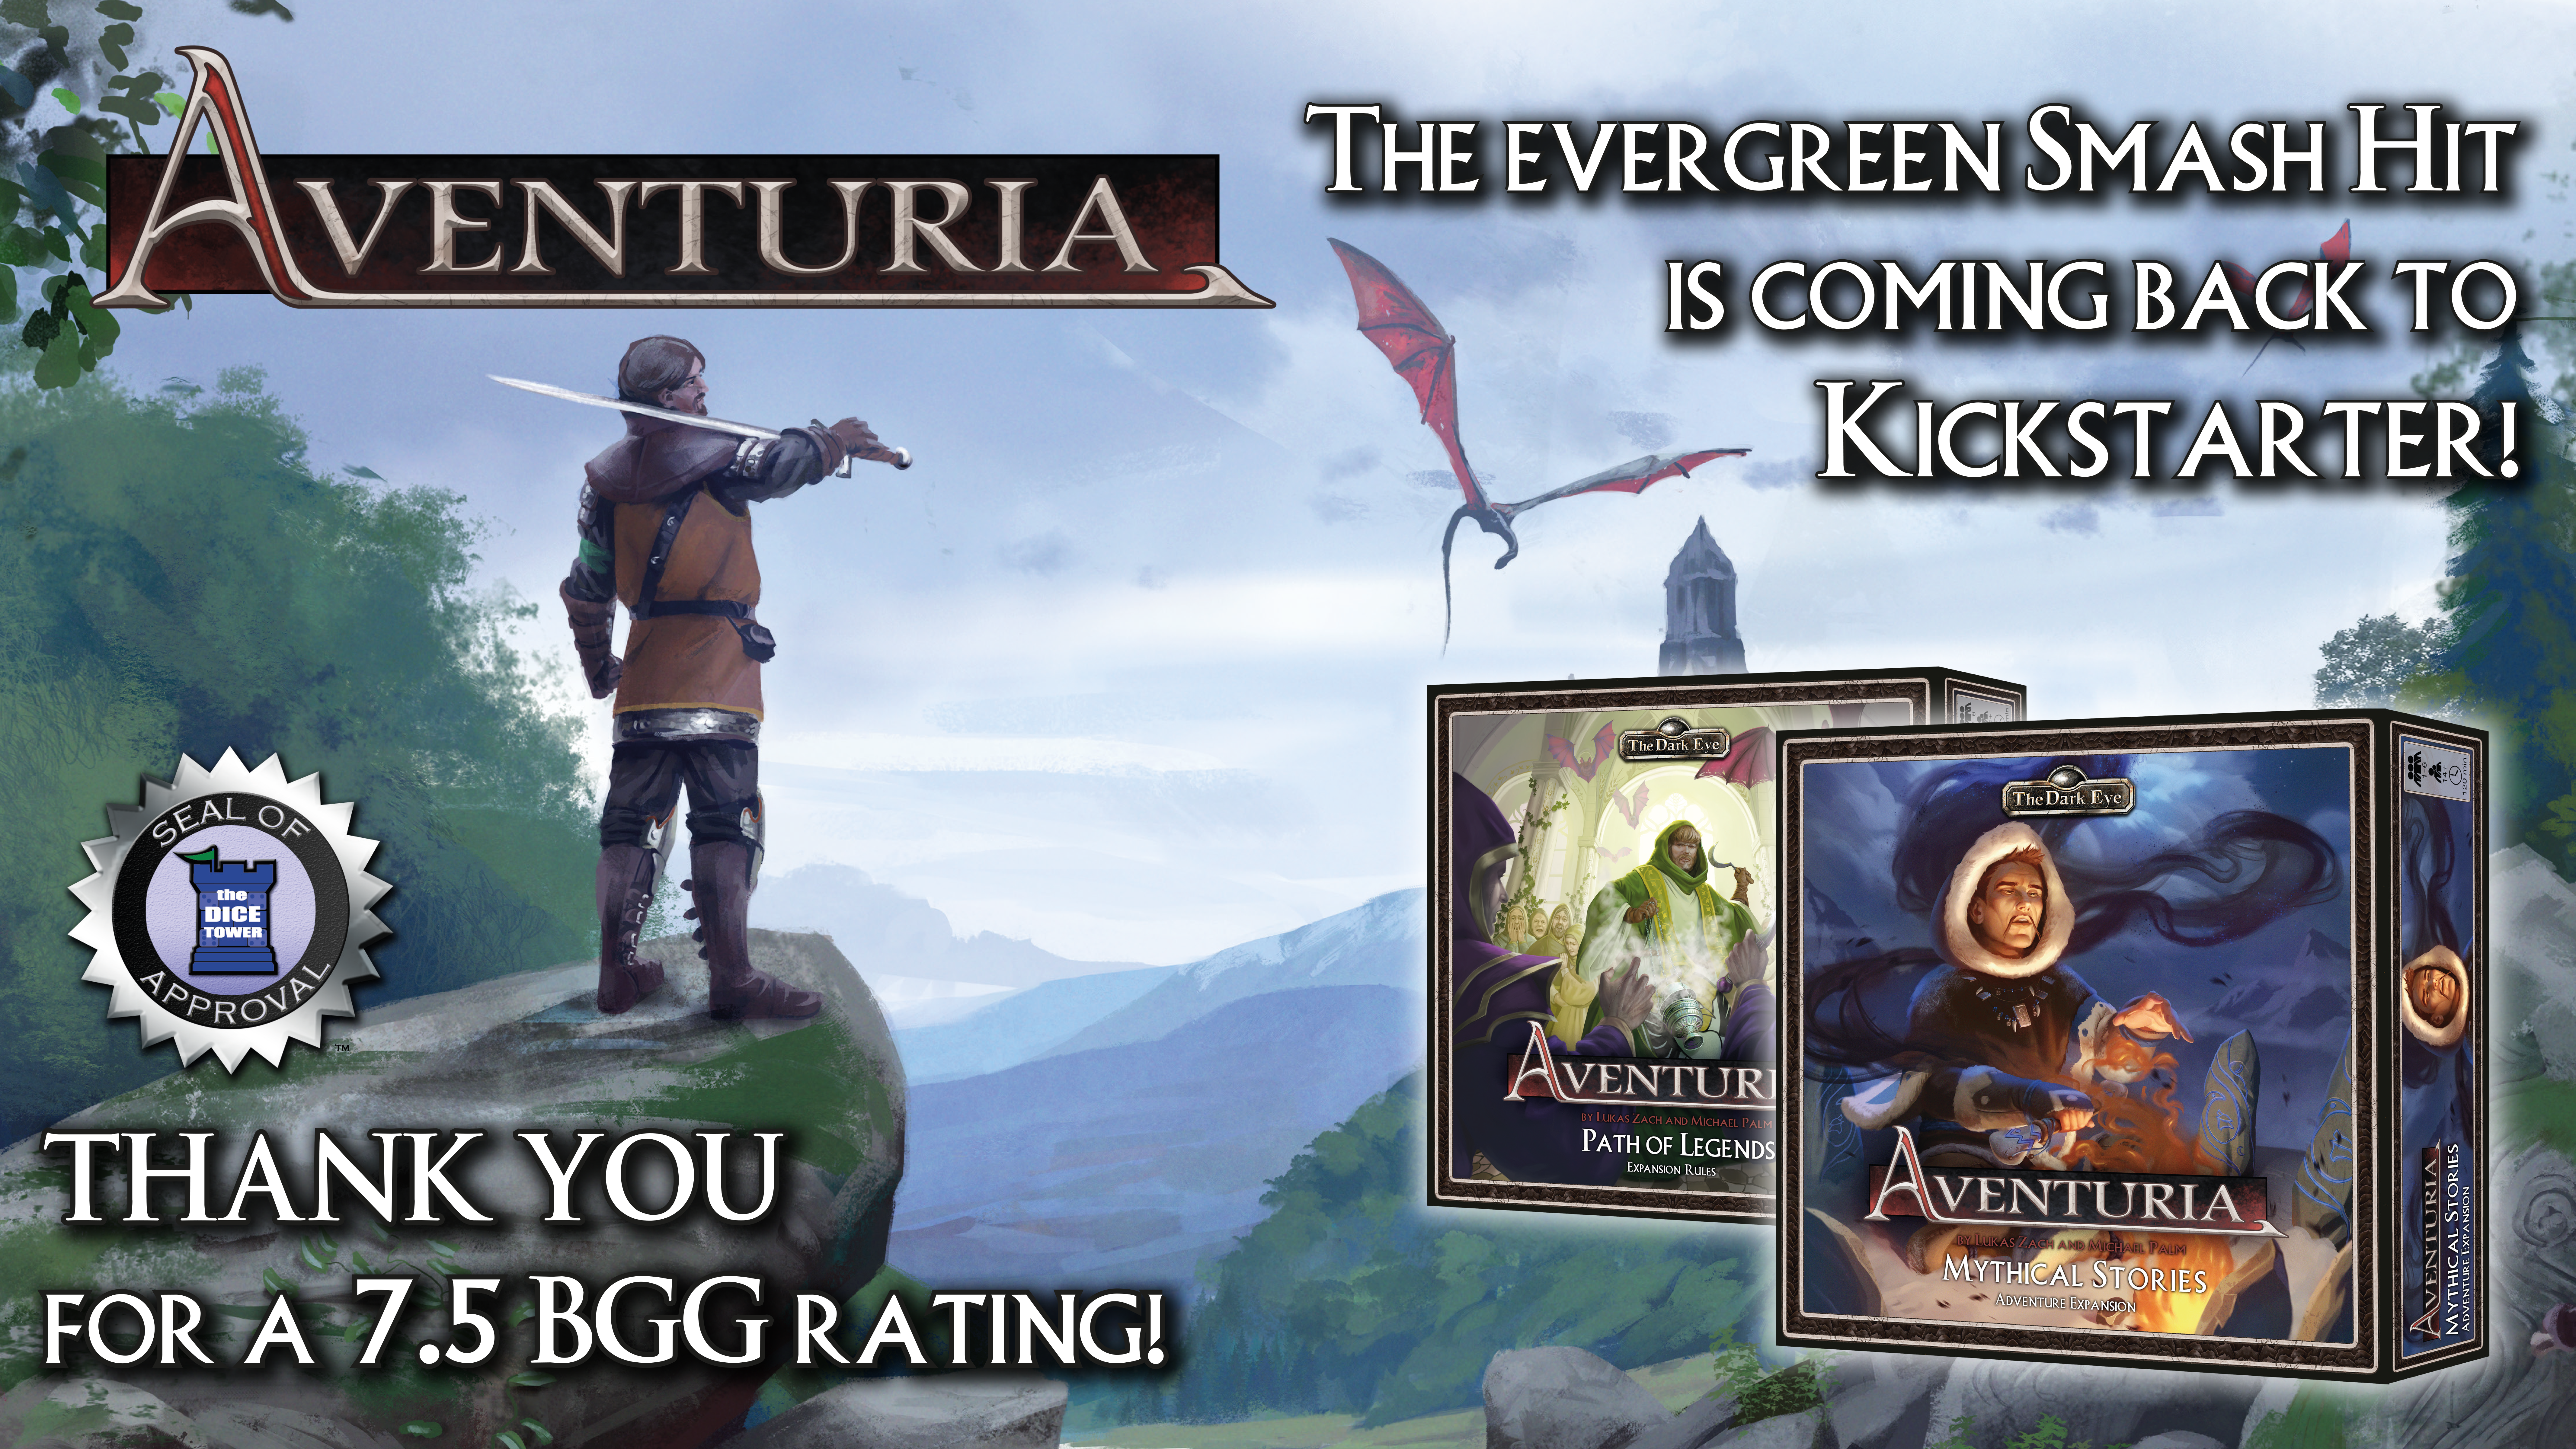 The evergreen smash hit Aventuria is coming back to Kickstarter!